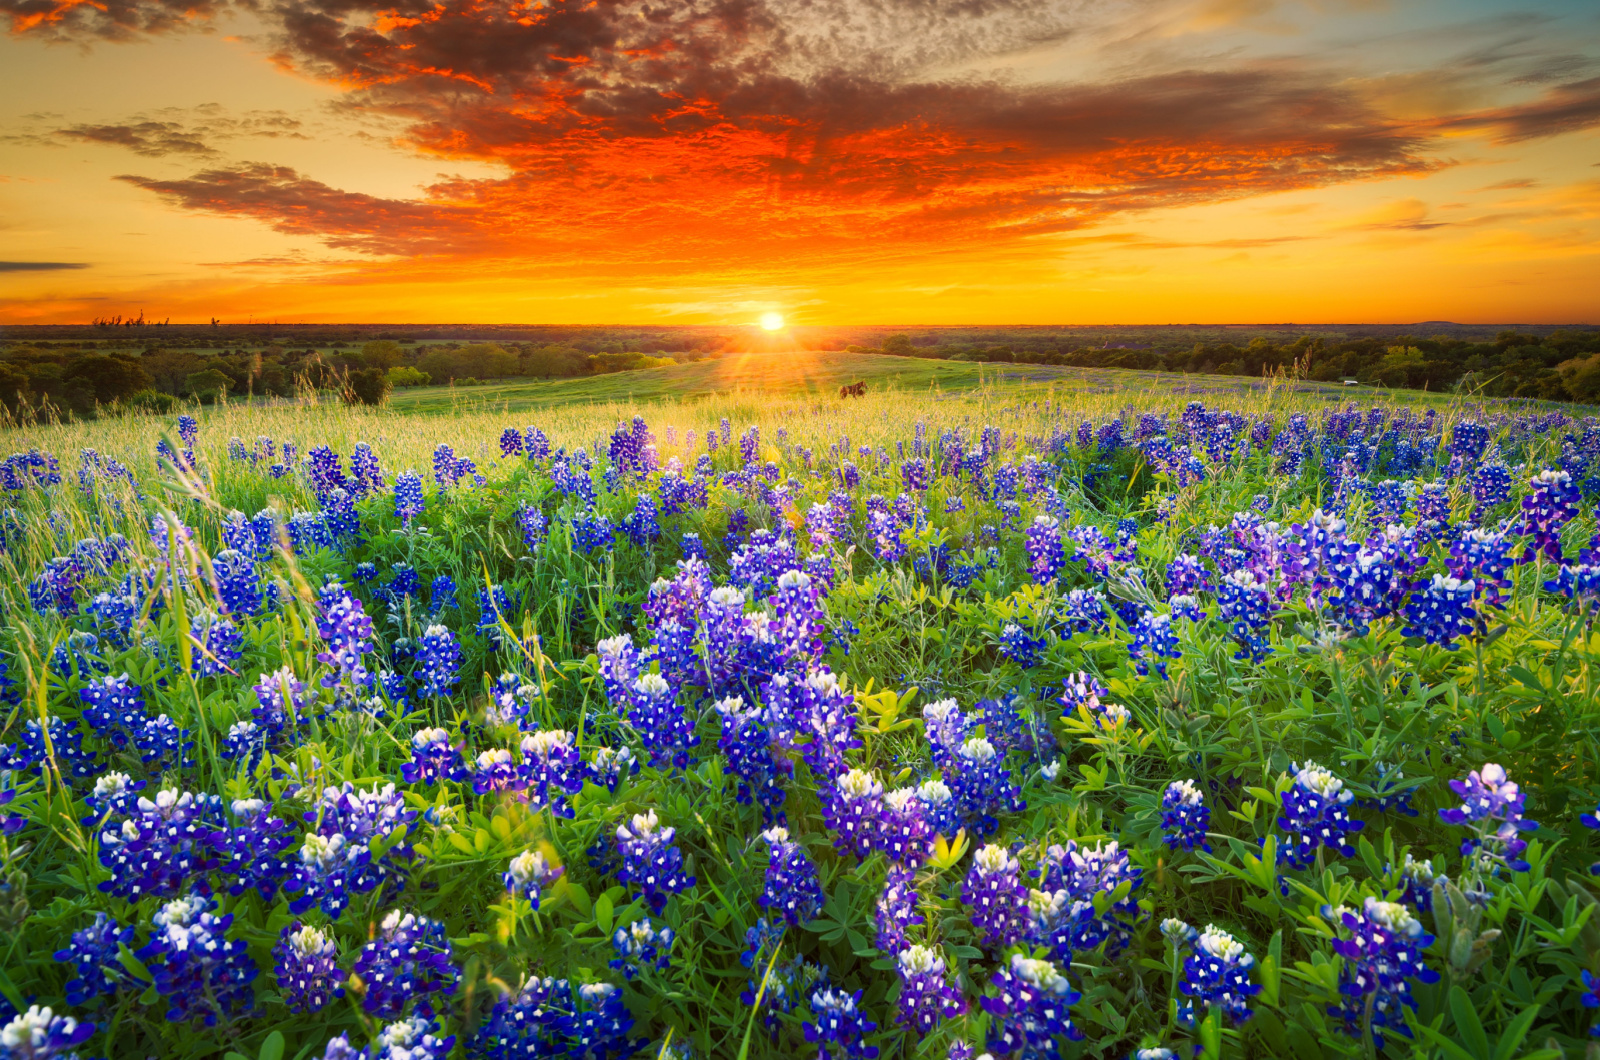 Texas Bluebonnet Flower in sunset